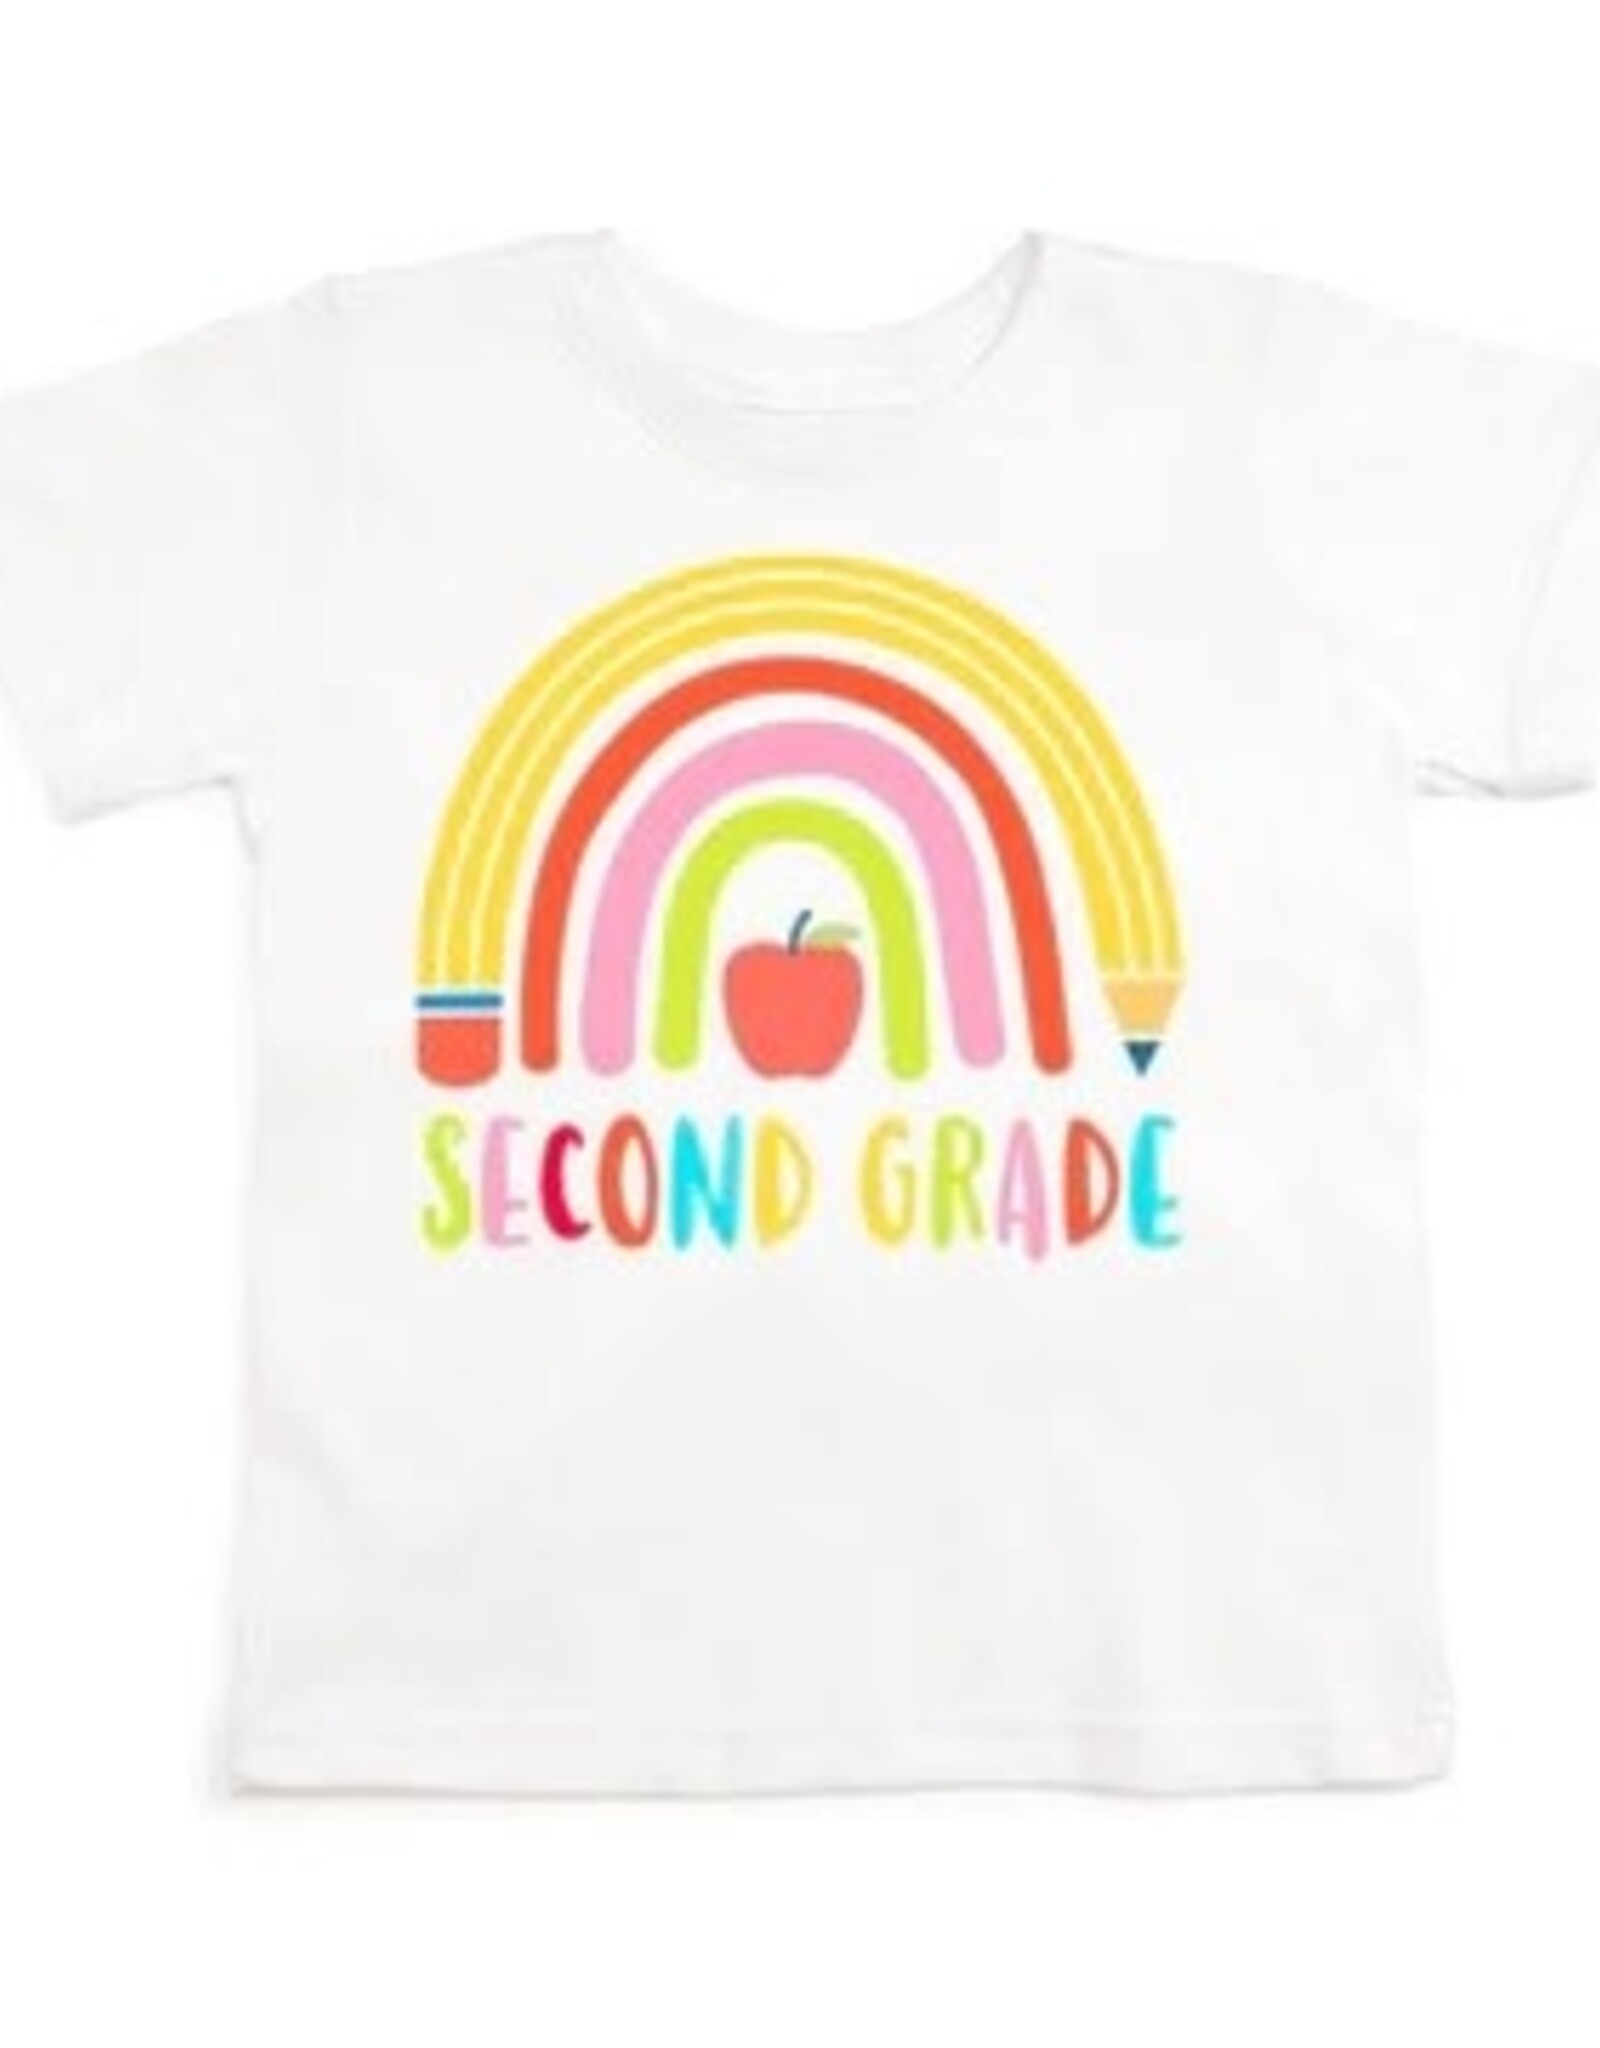 Pencil Rainbow Shirt 2nd Grade 7/8